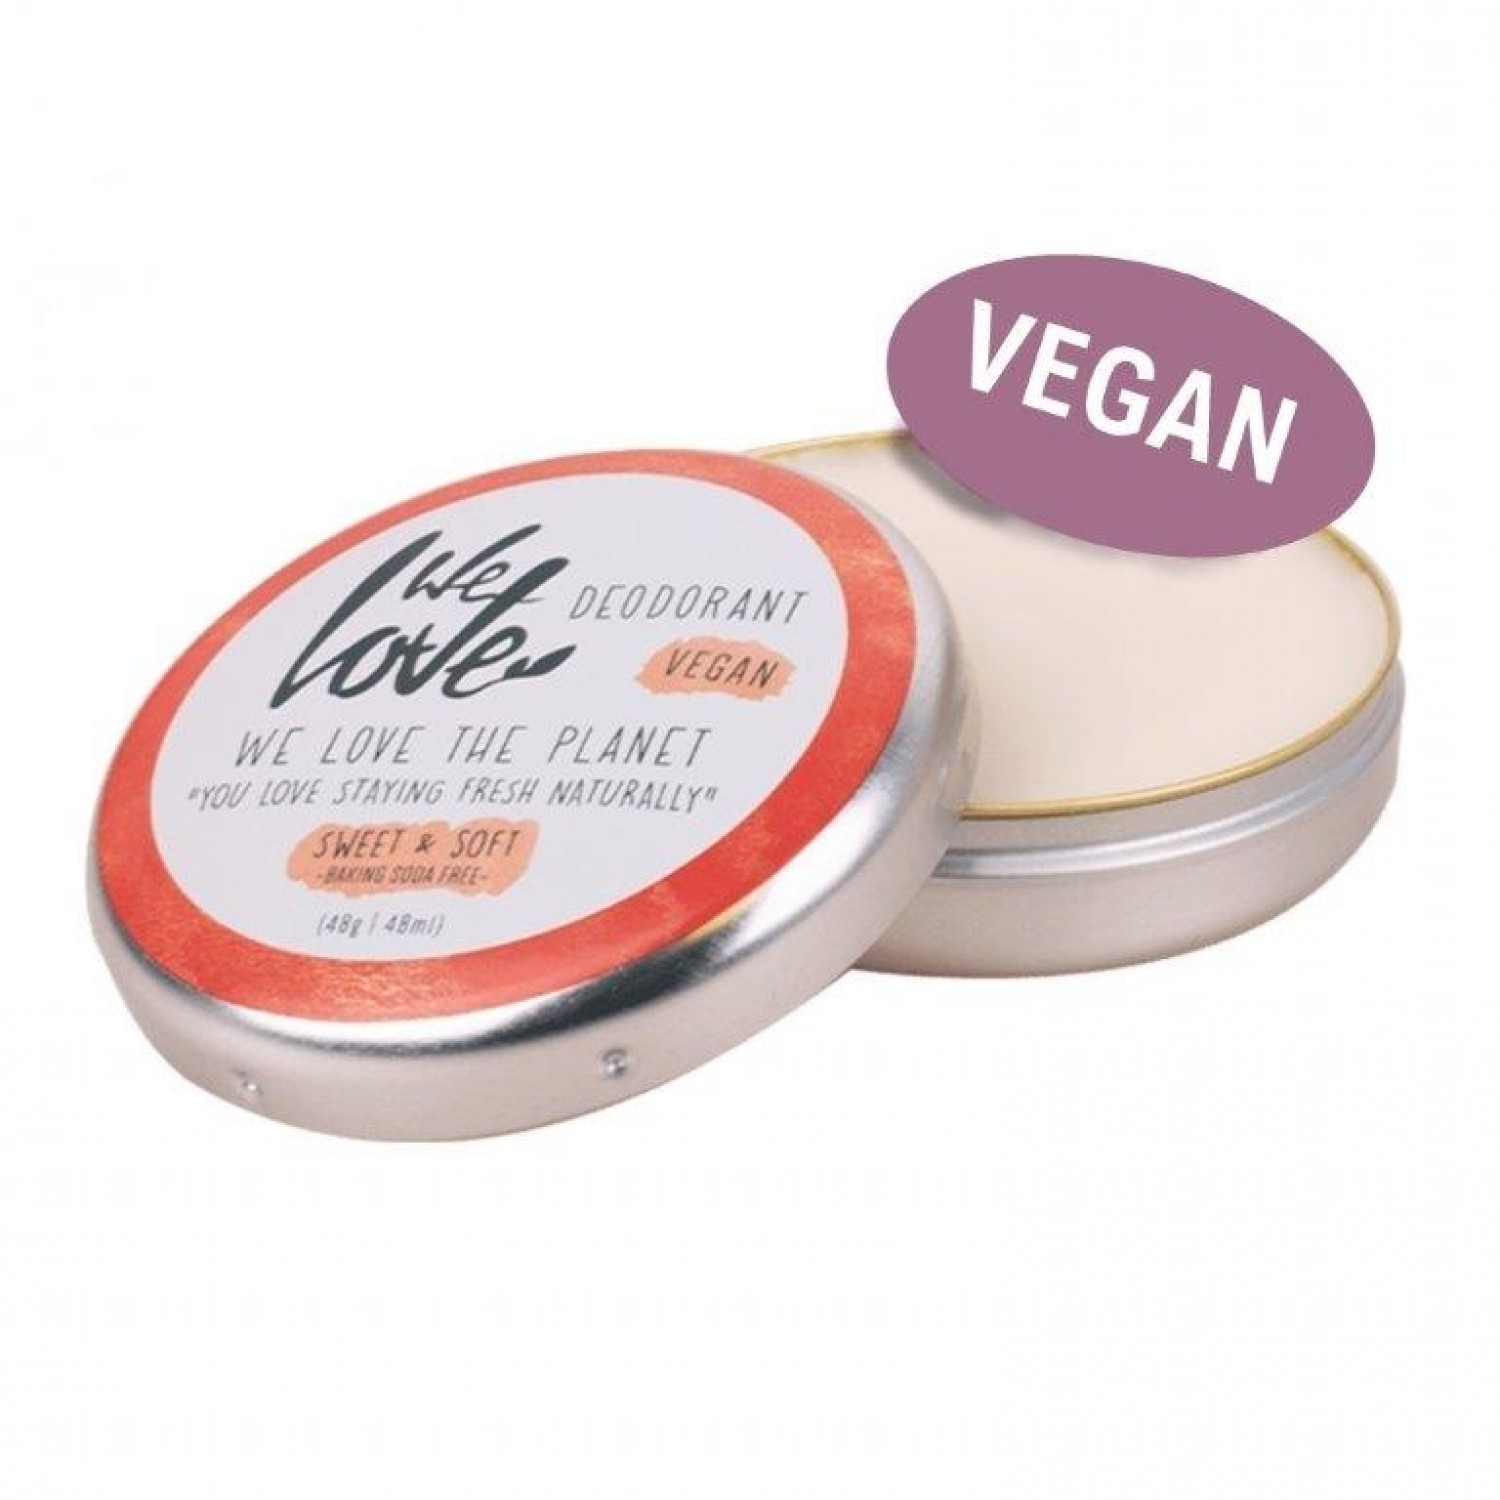 Vegan Deodorant Cream Sweet & Soft » We love the Planet